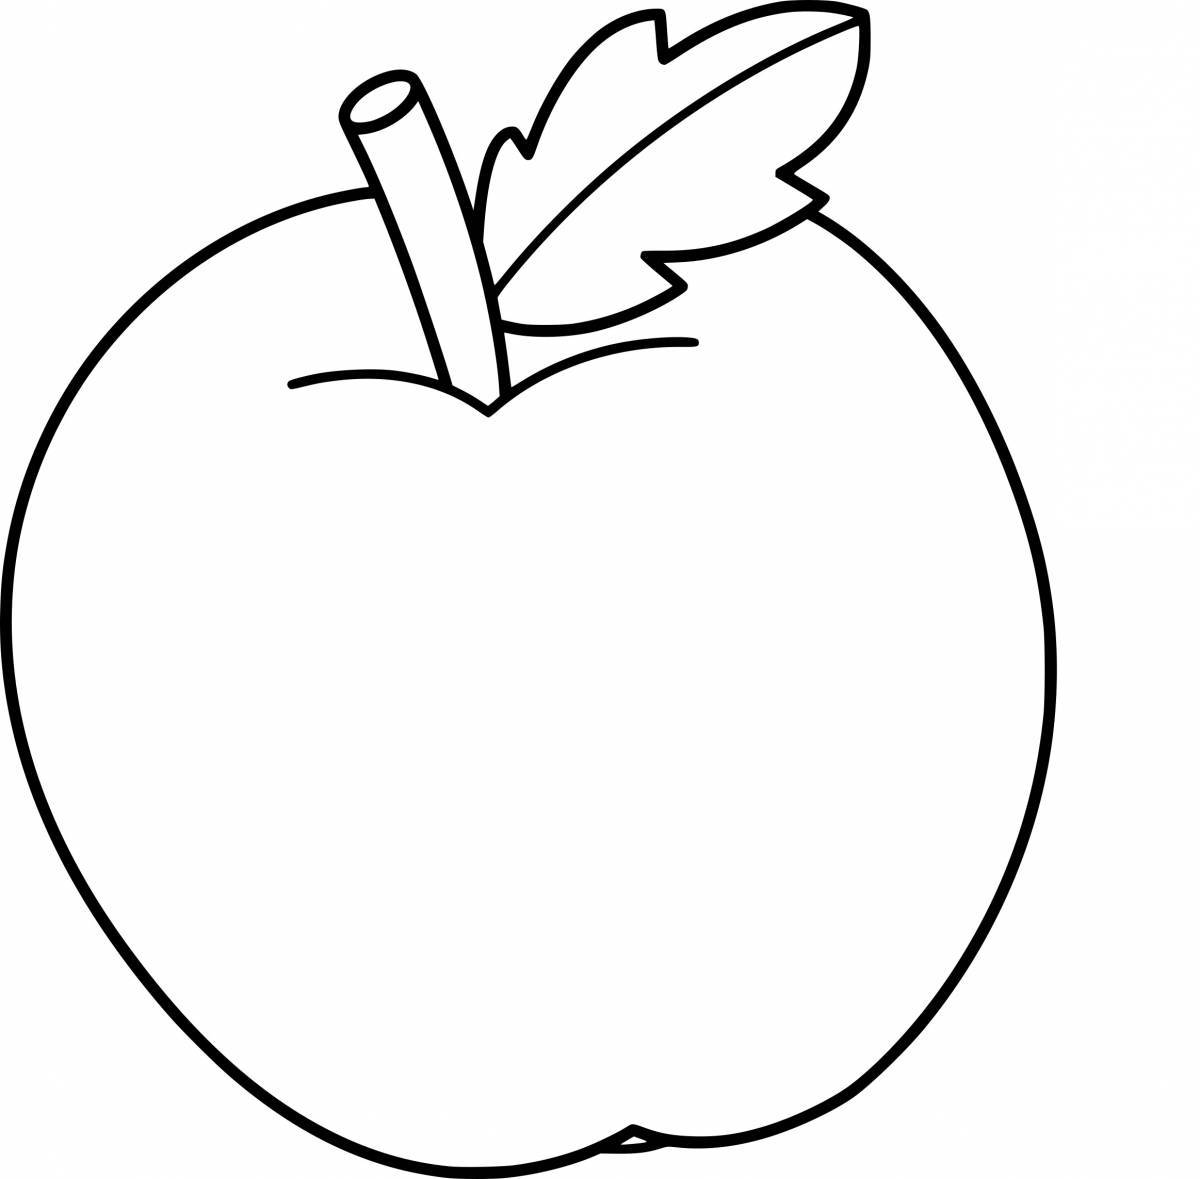 Joyful apple coloring book for kids